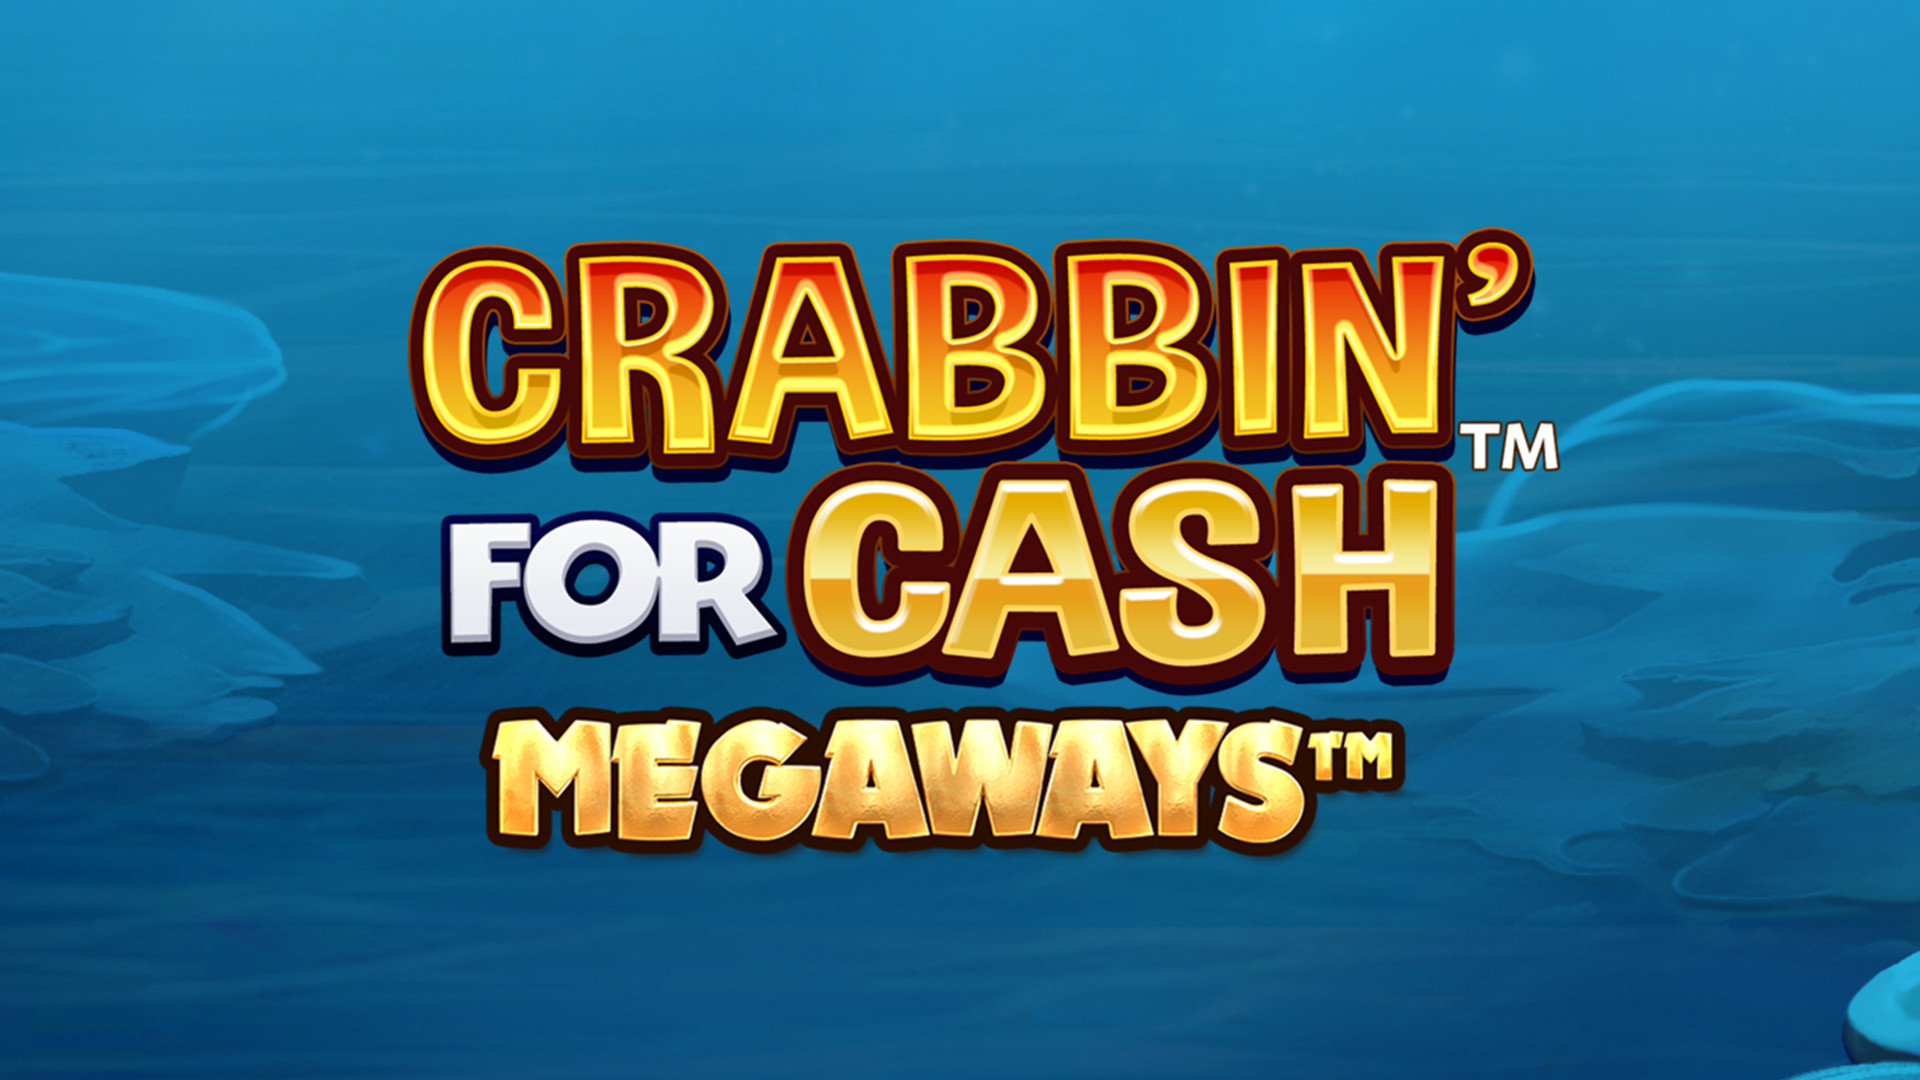 Crabbin' for Cash MEGAWAYS